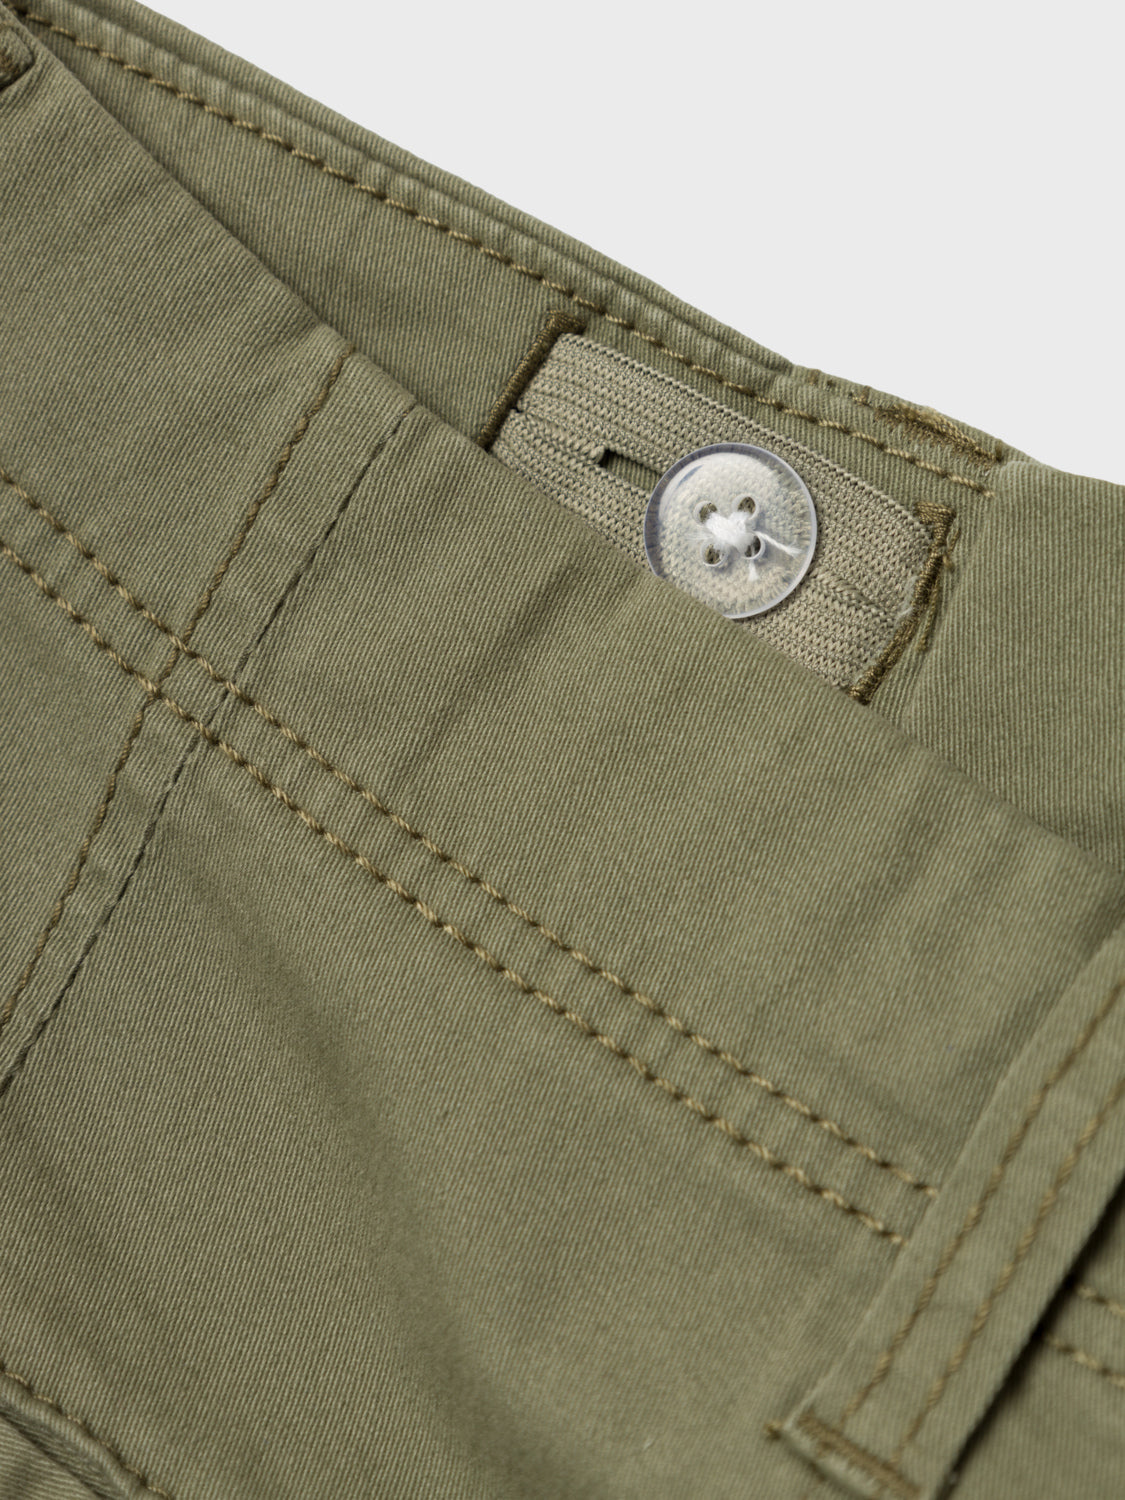 NKMRYAN Shorts - Deep Lichen Green